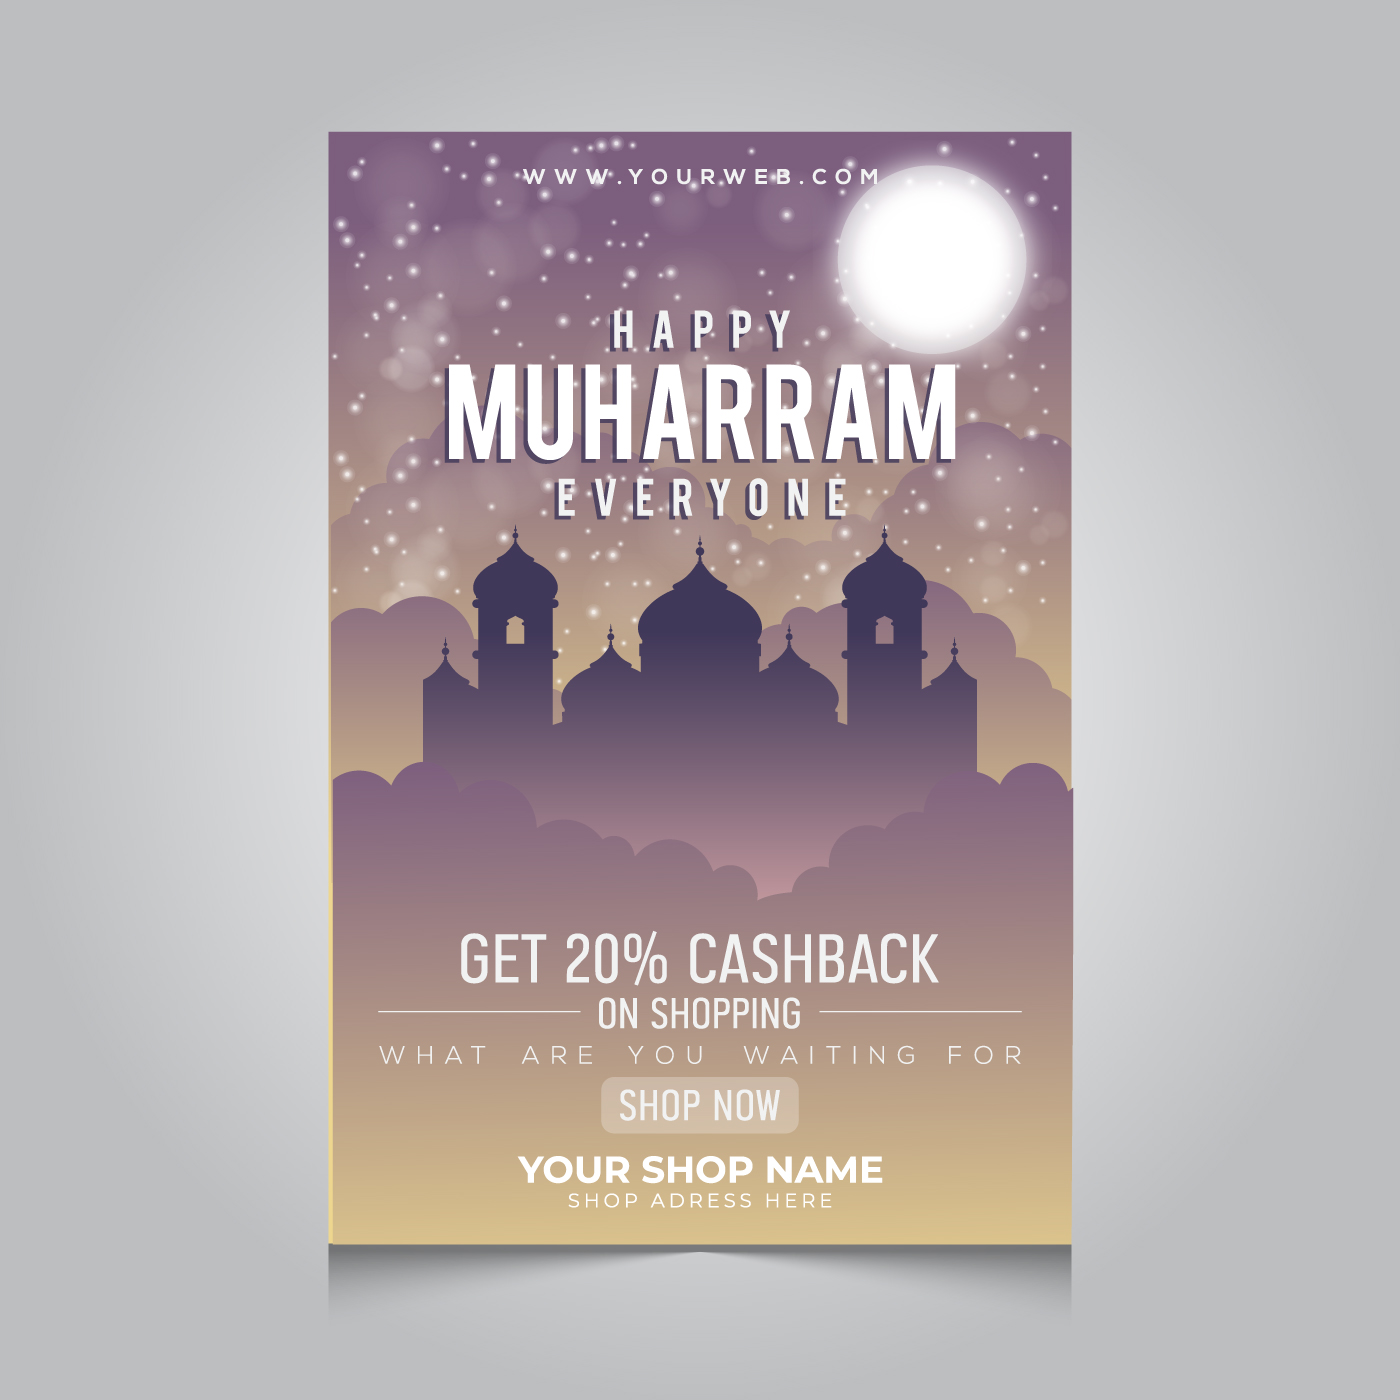 Happy Muharram Poster Design For Islamic Store Download Free Vectors Clipart Graphics Vector Art